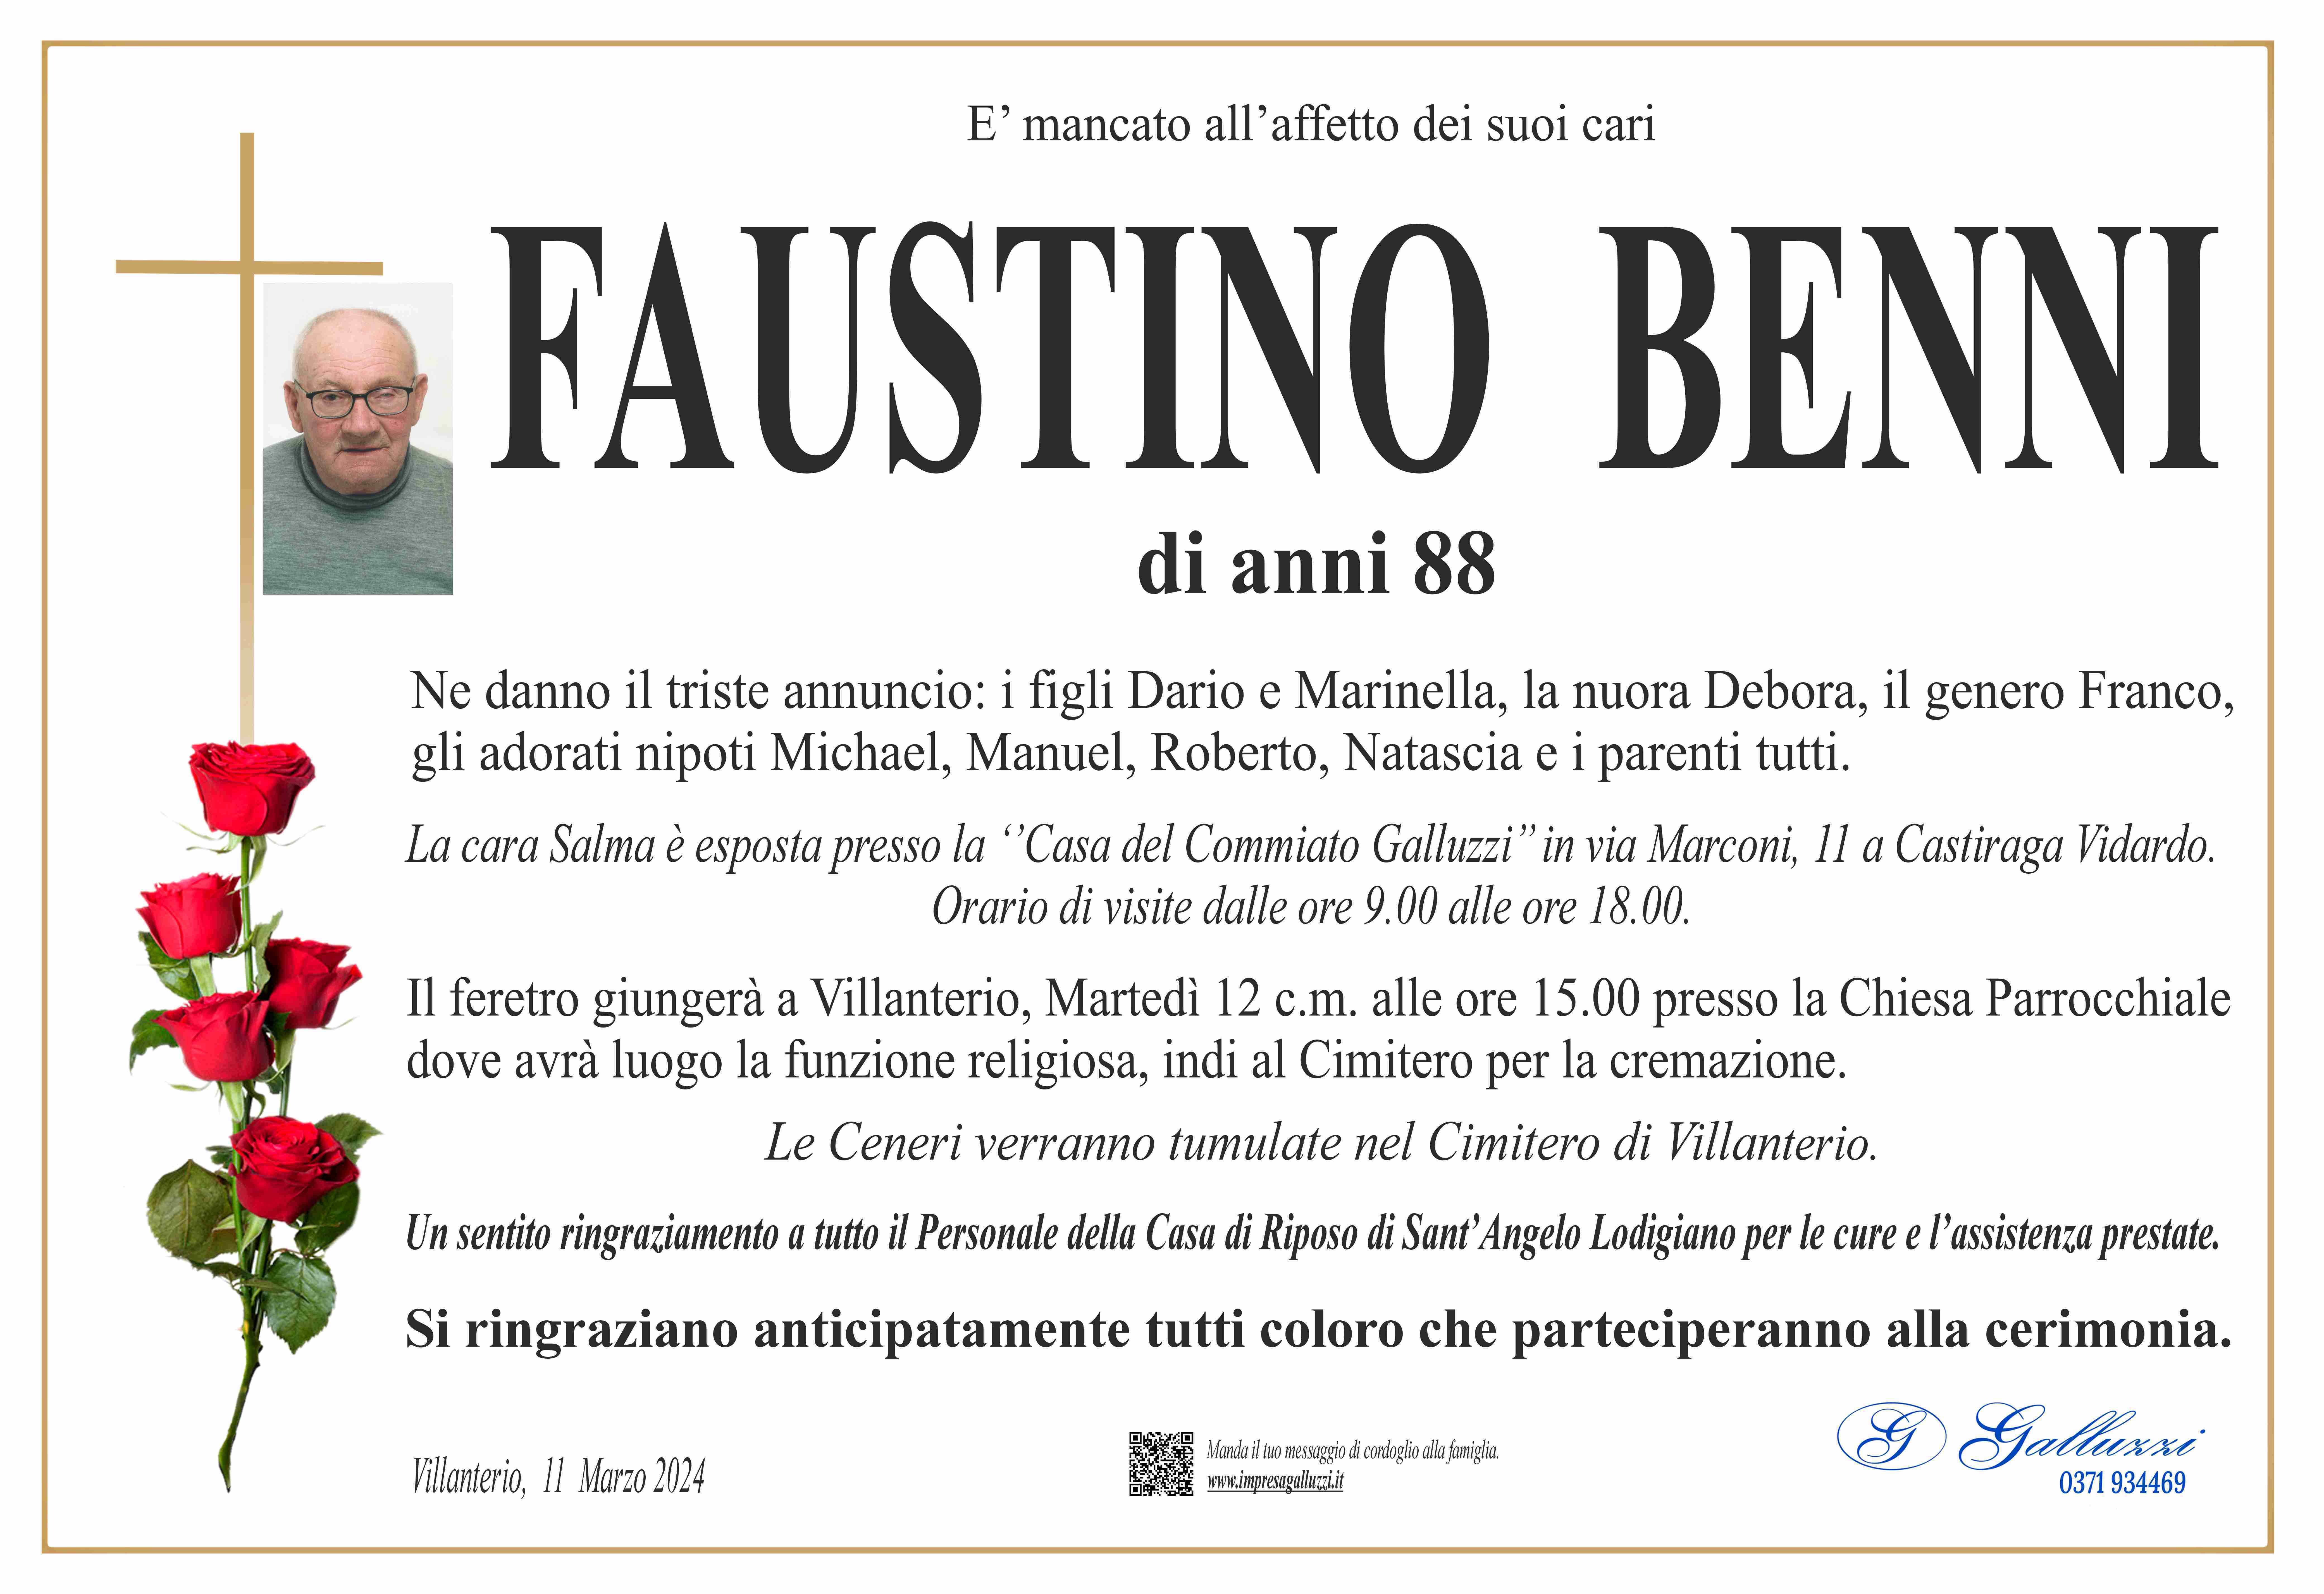 Faustino Benni